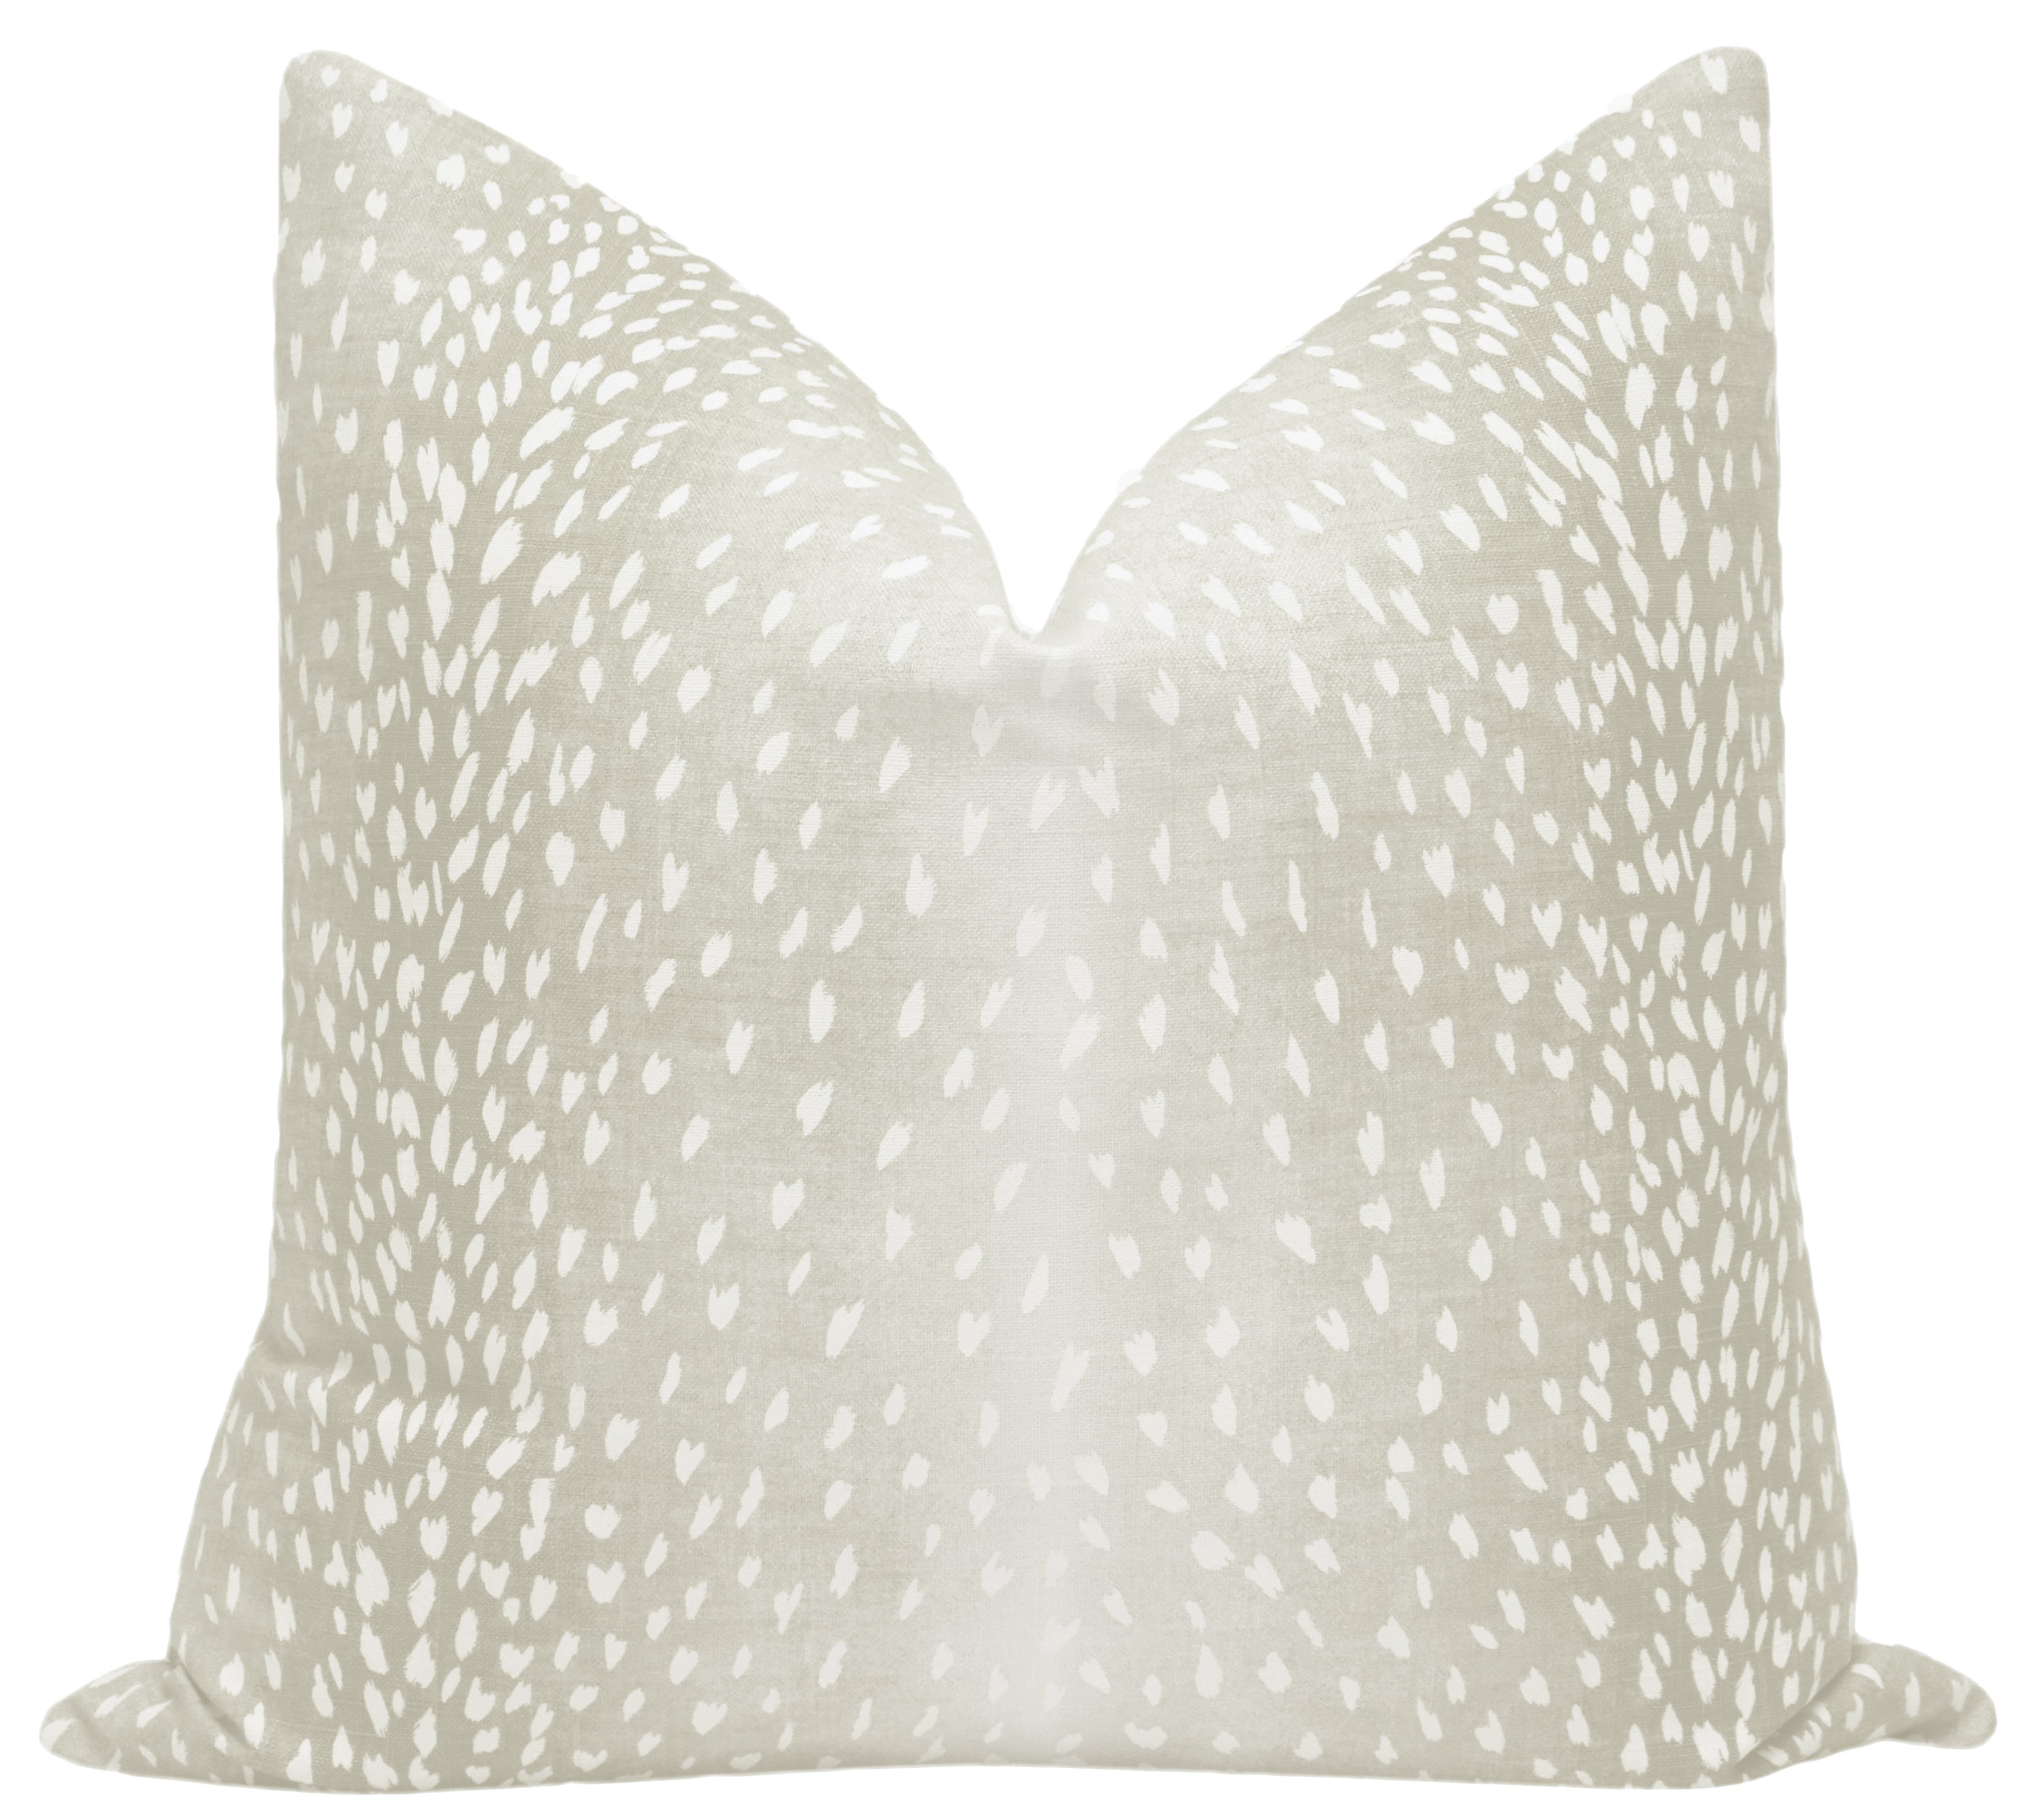 Antelope Linen Print Throw Pillow Cover, Cashmere, 20" x 20" - Little Design Company